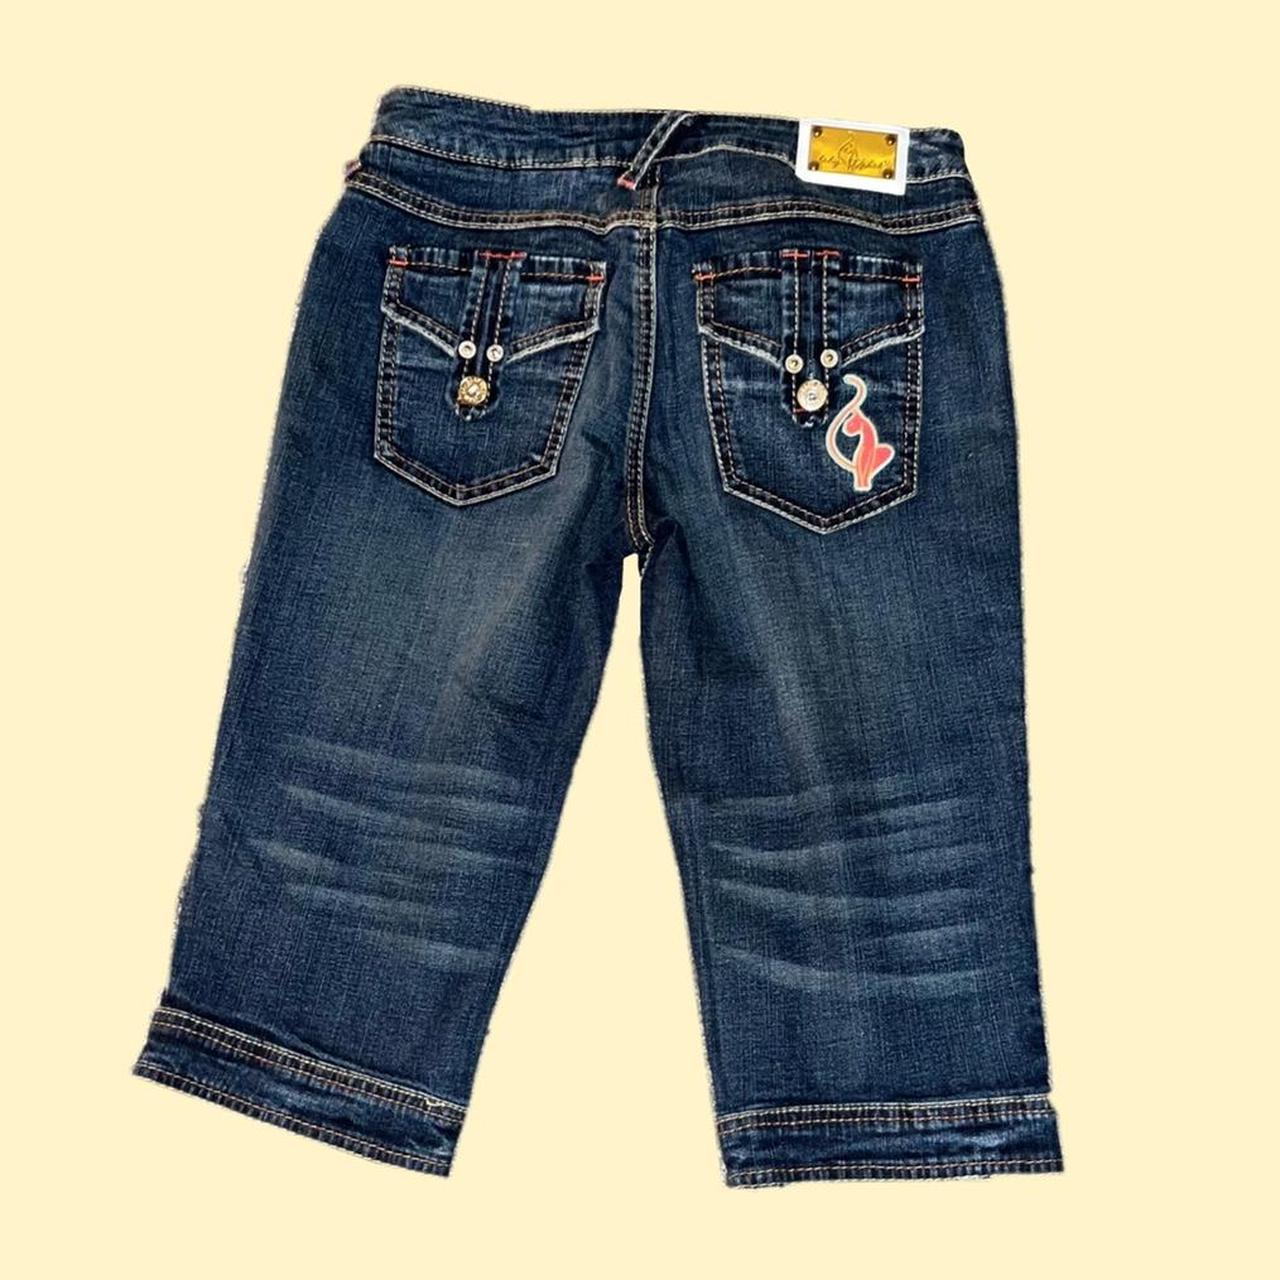 Very cute y2k baby phat jeans pink kitty on the... - Depop